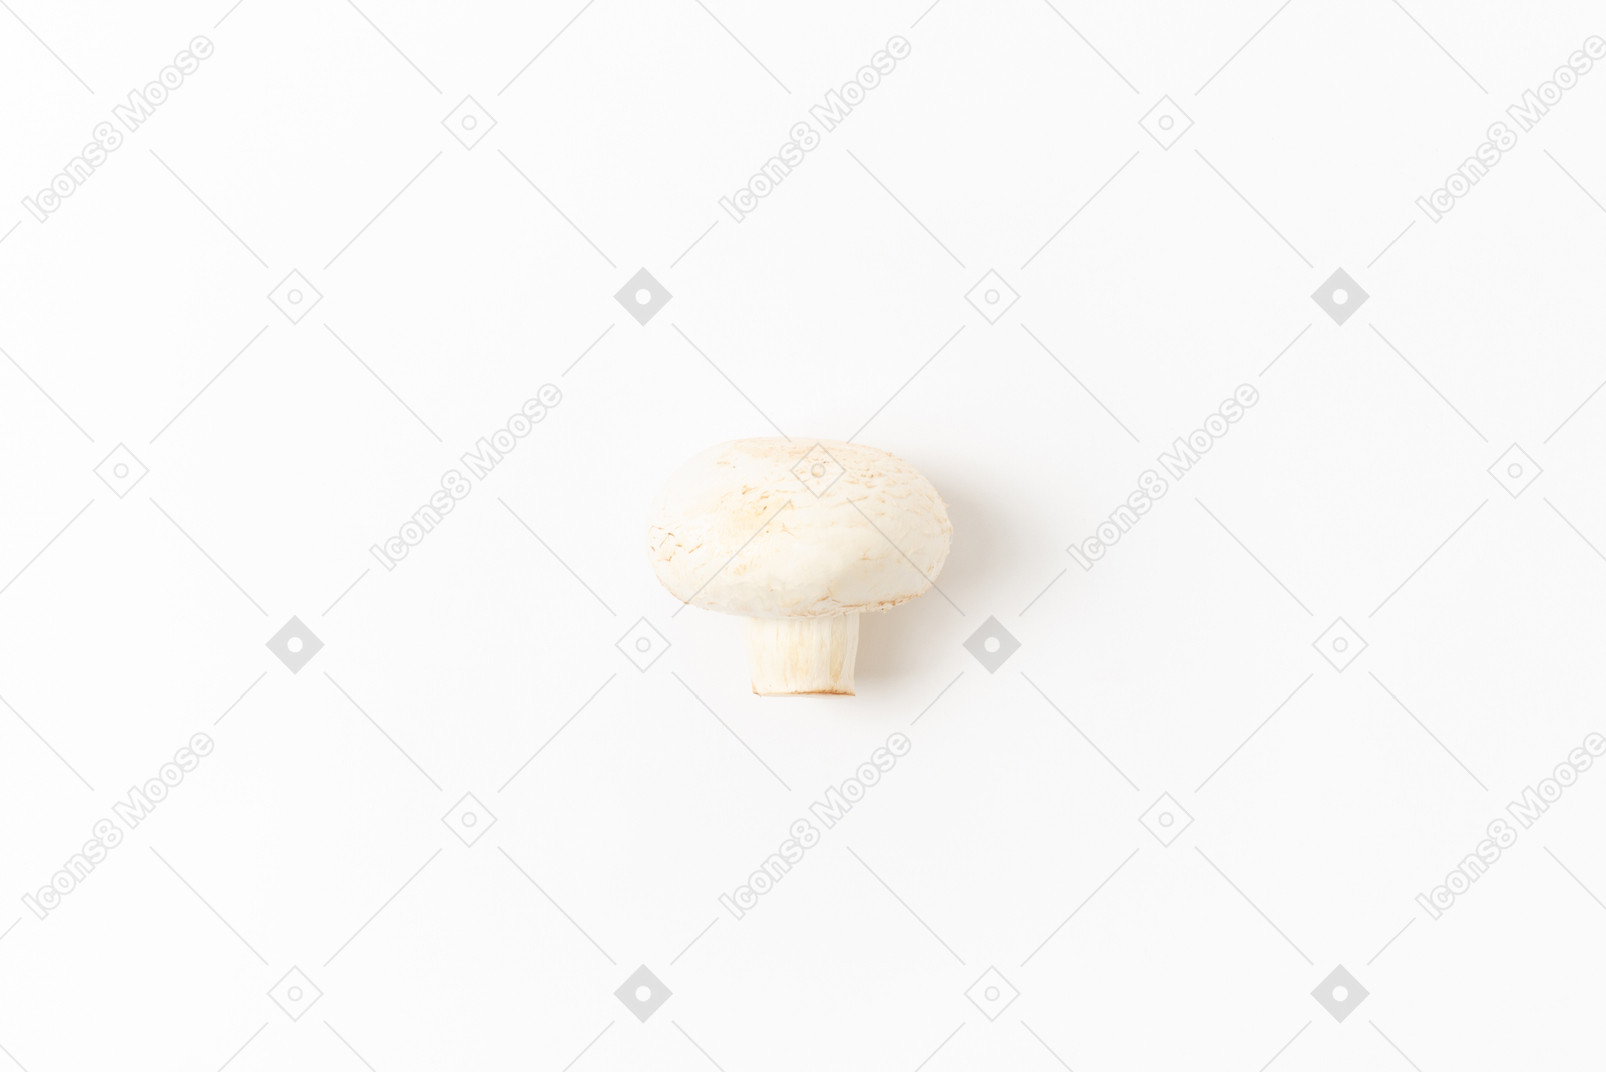 Alguma idéia sobre receita de cogumelos?